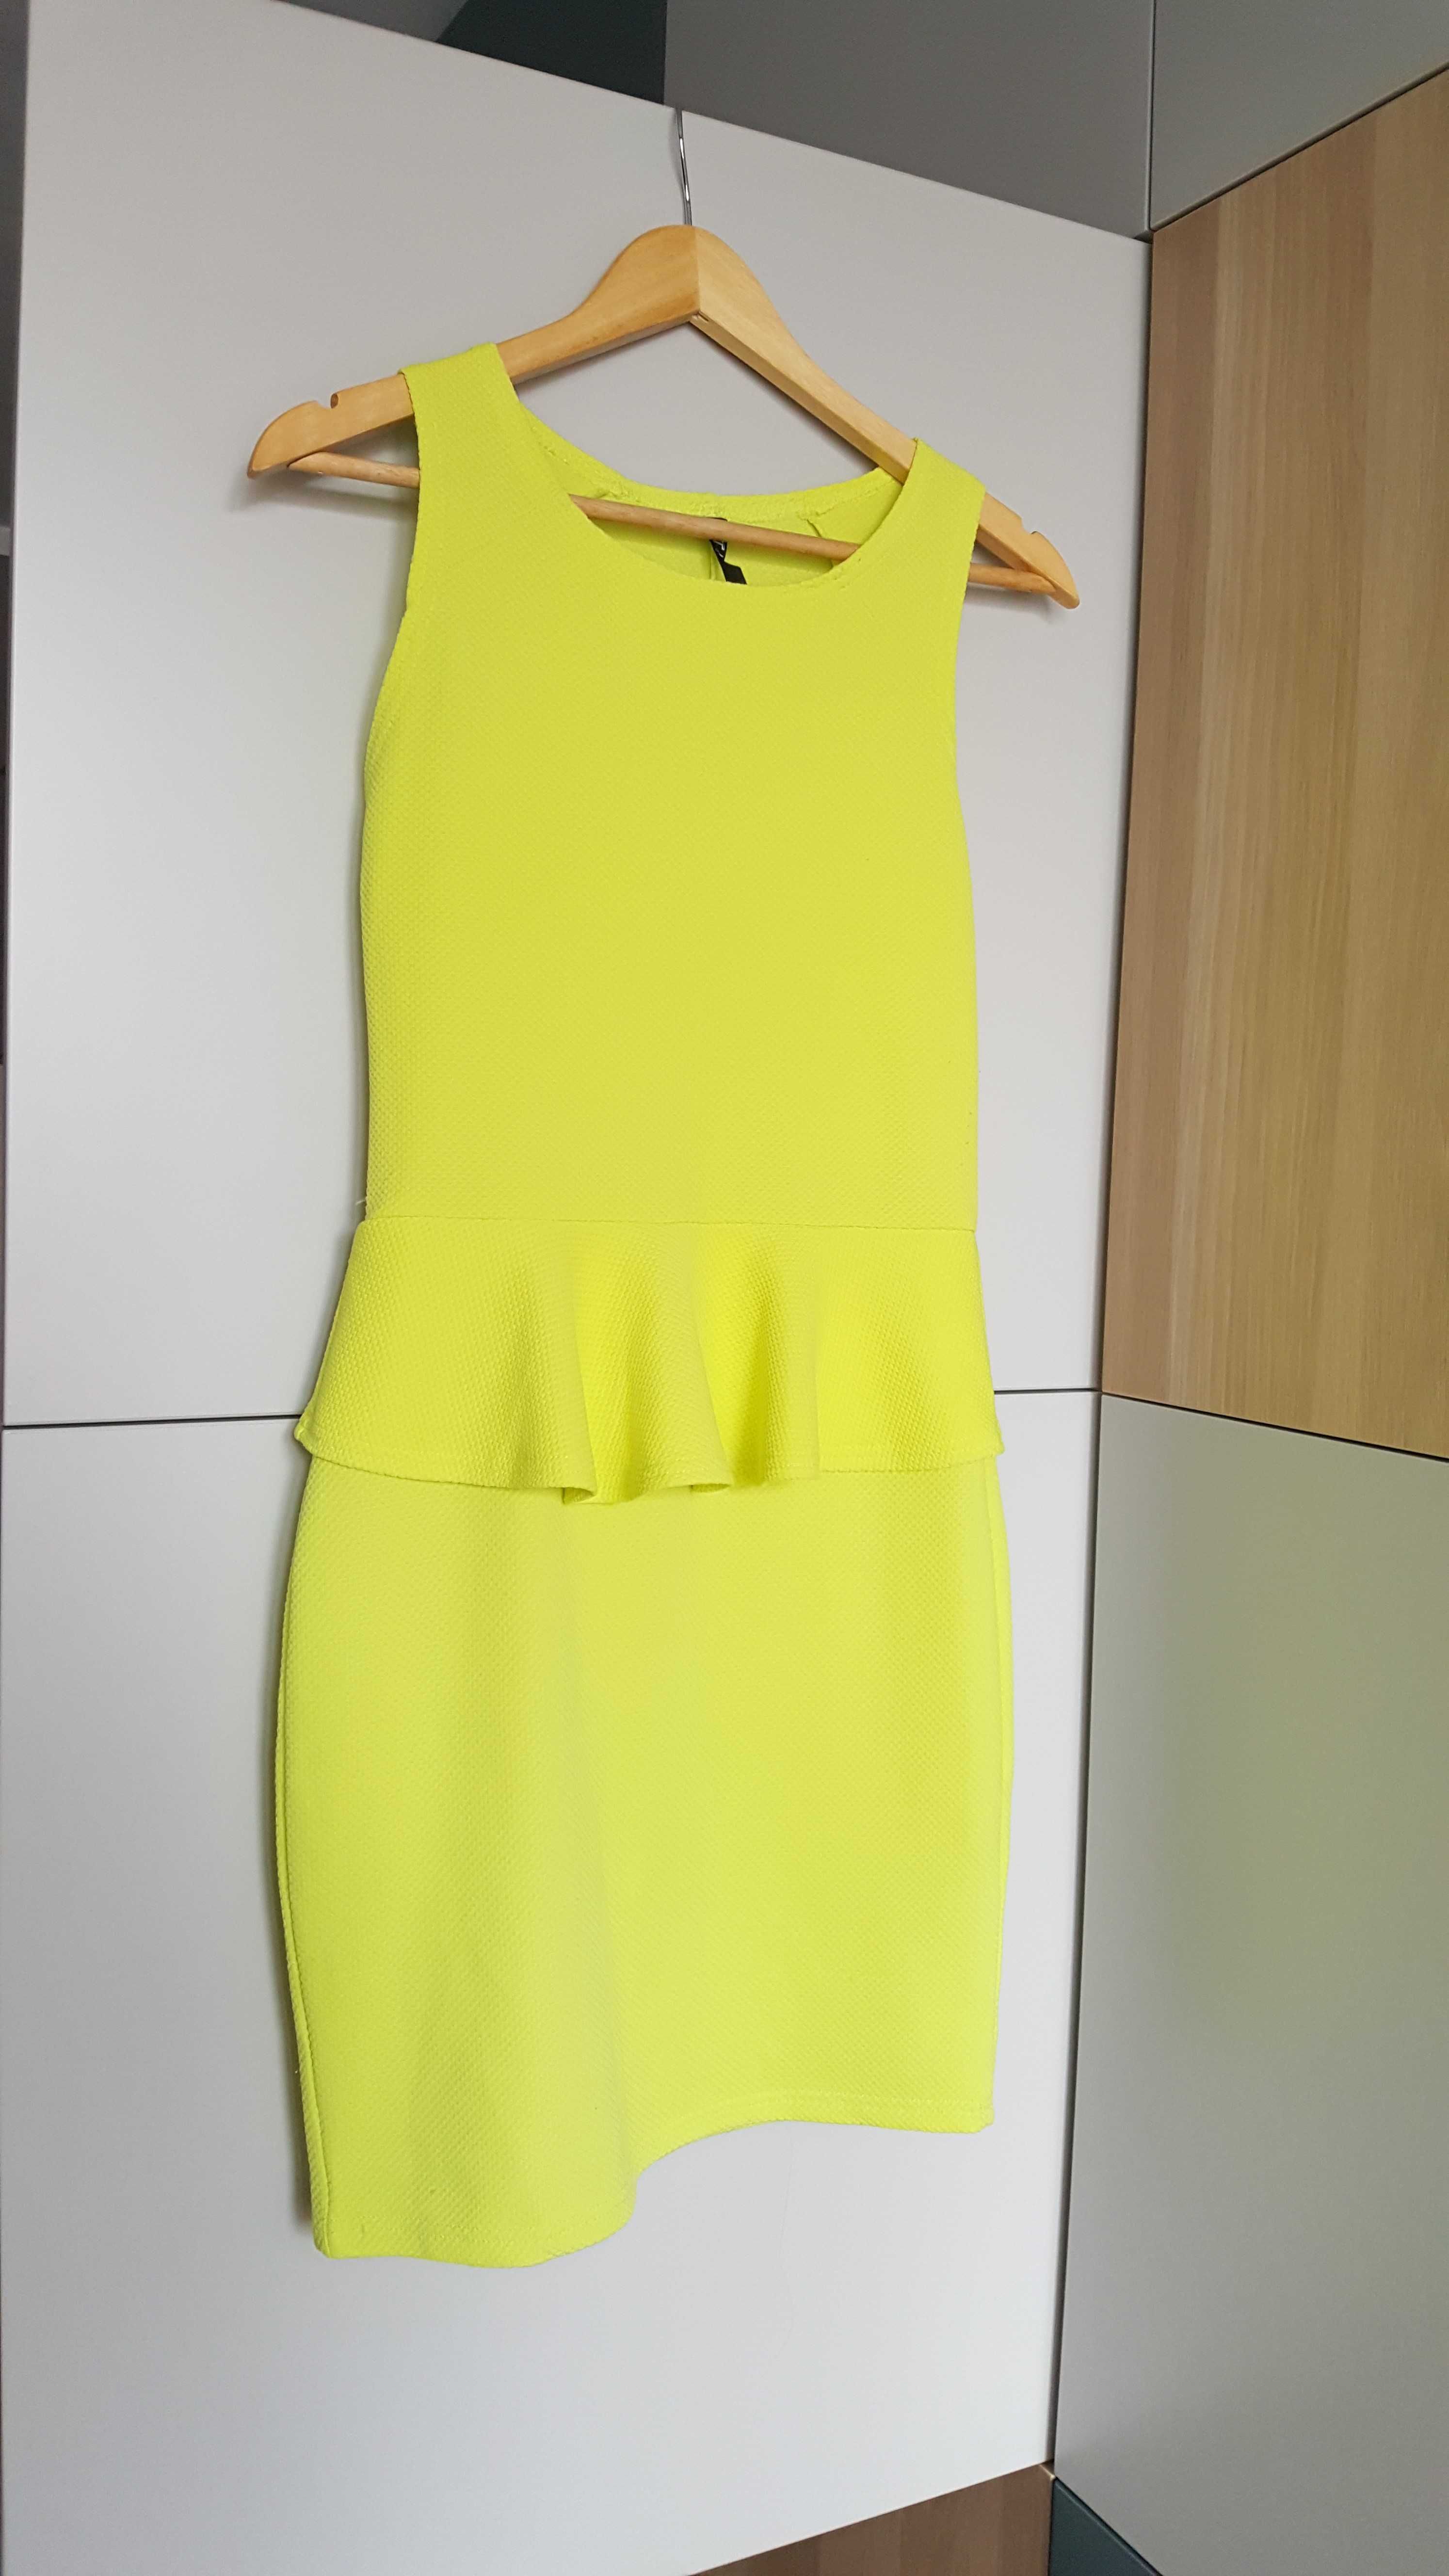 sukienka neonowa zielona rażąca neon żółta mini